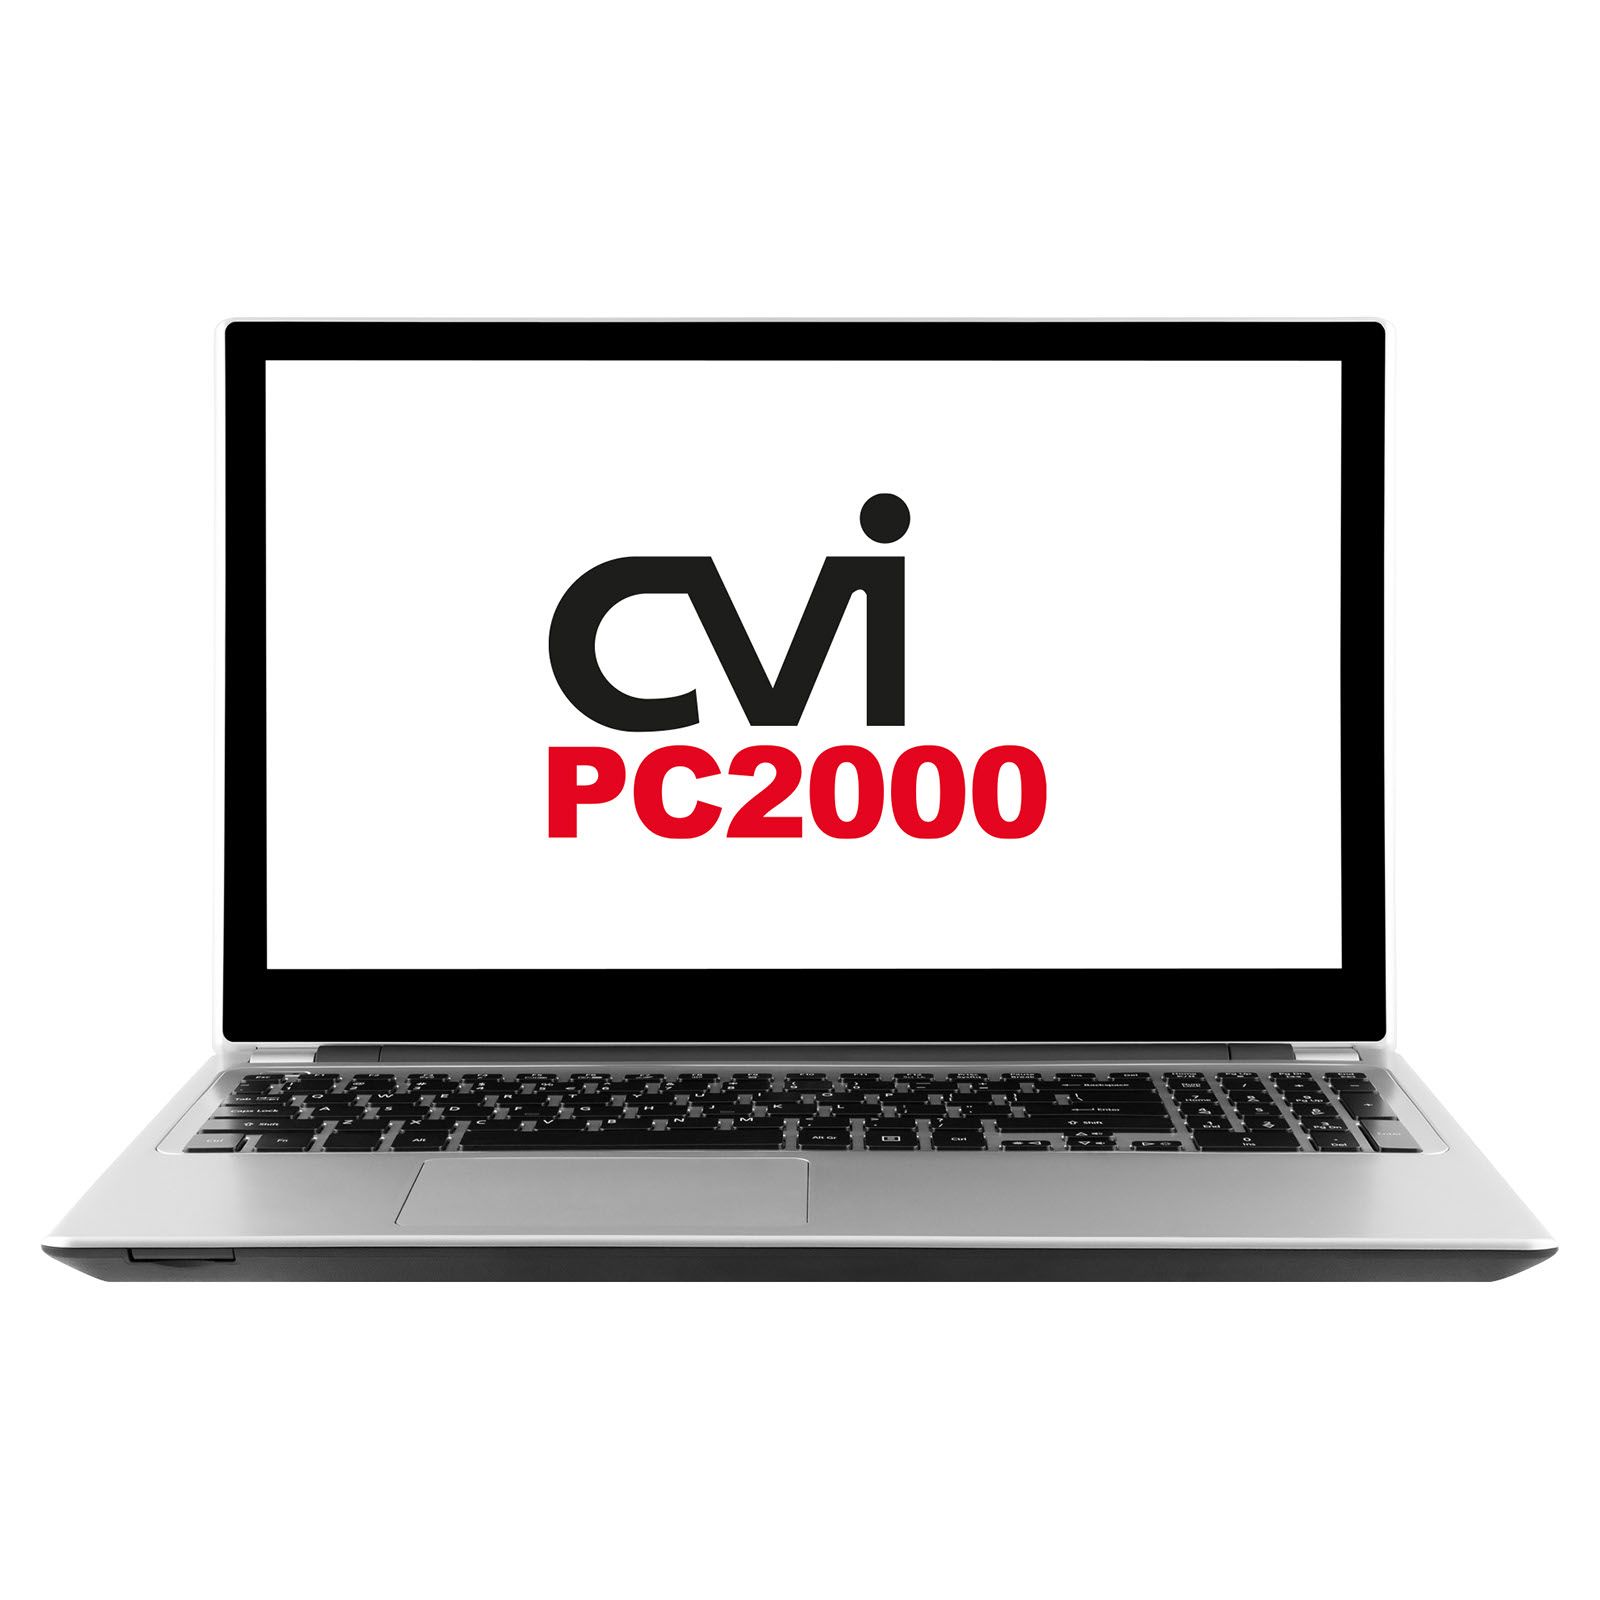 CVIPC2000 Software product photo